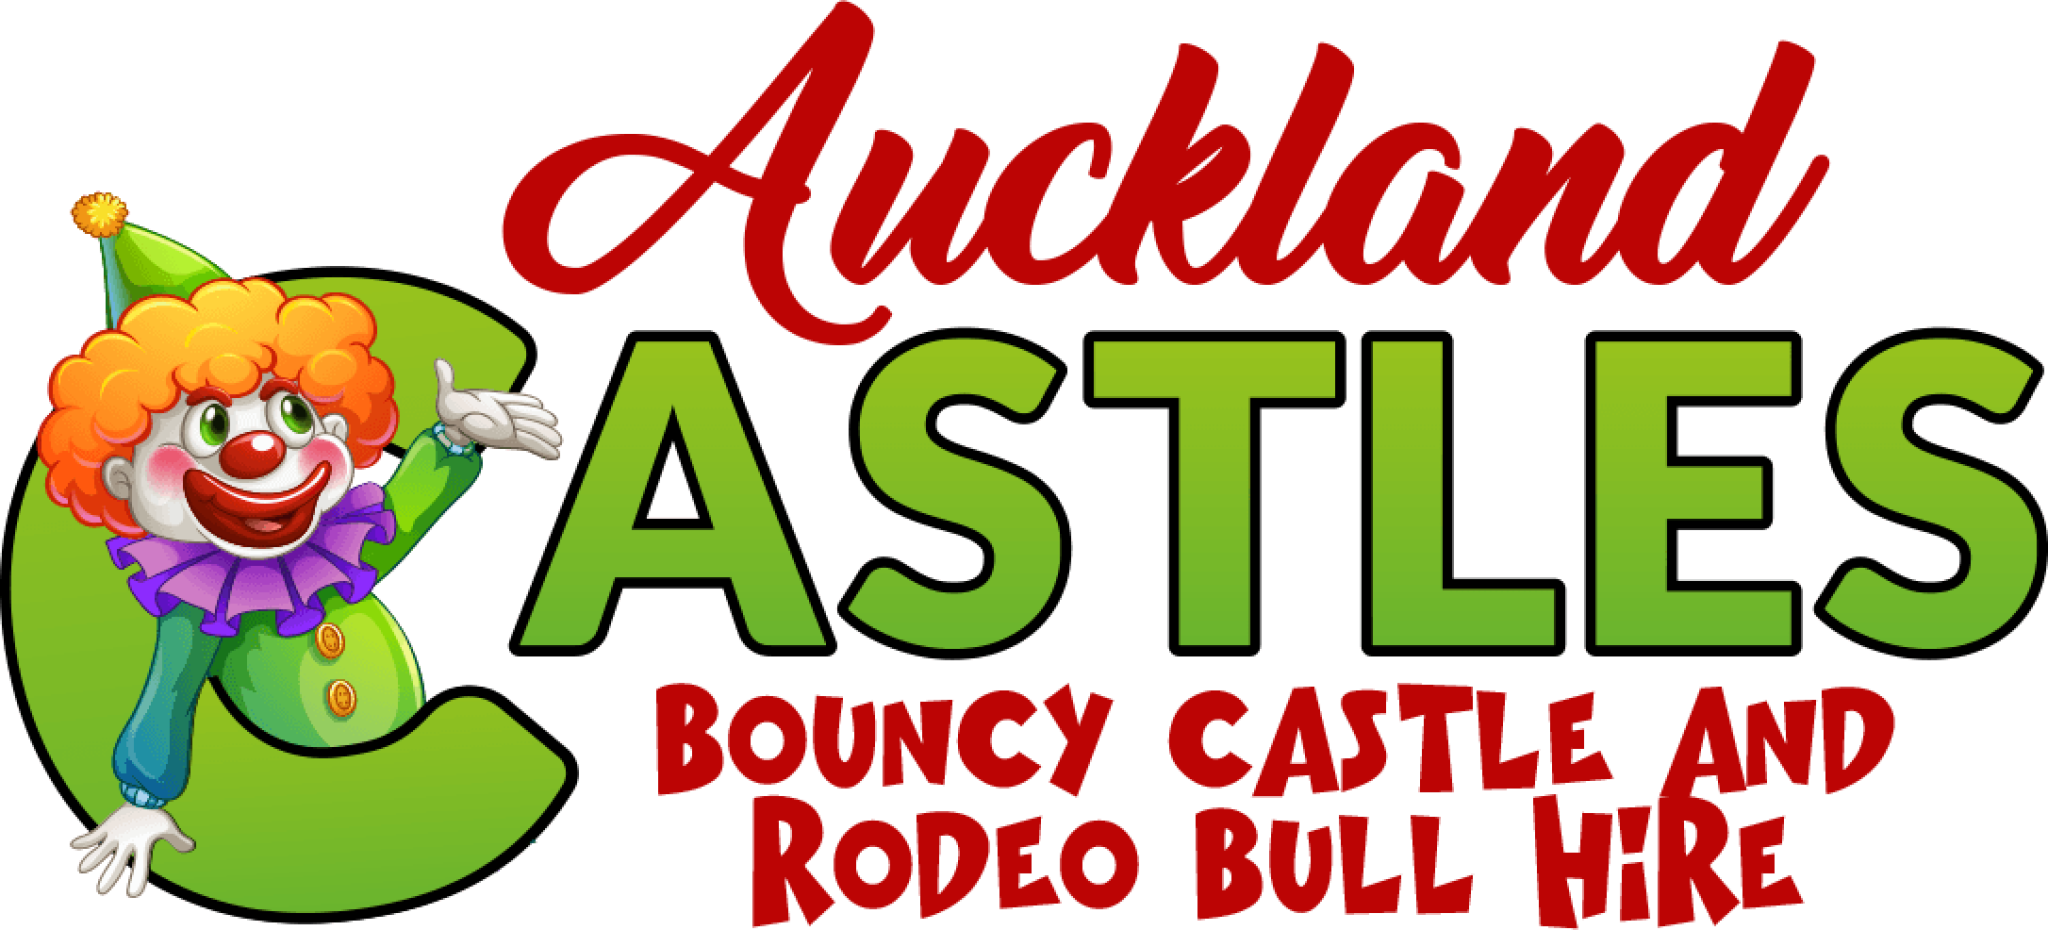 auckland-castles-logo.png